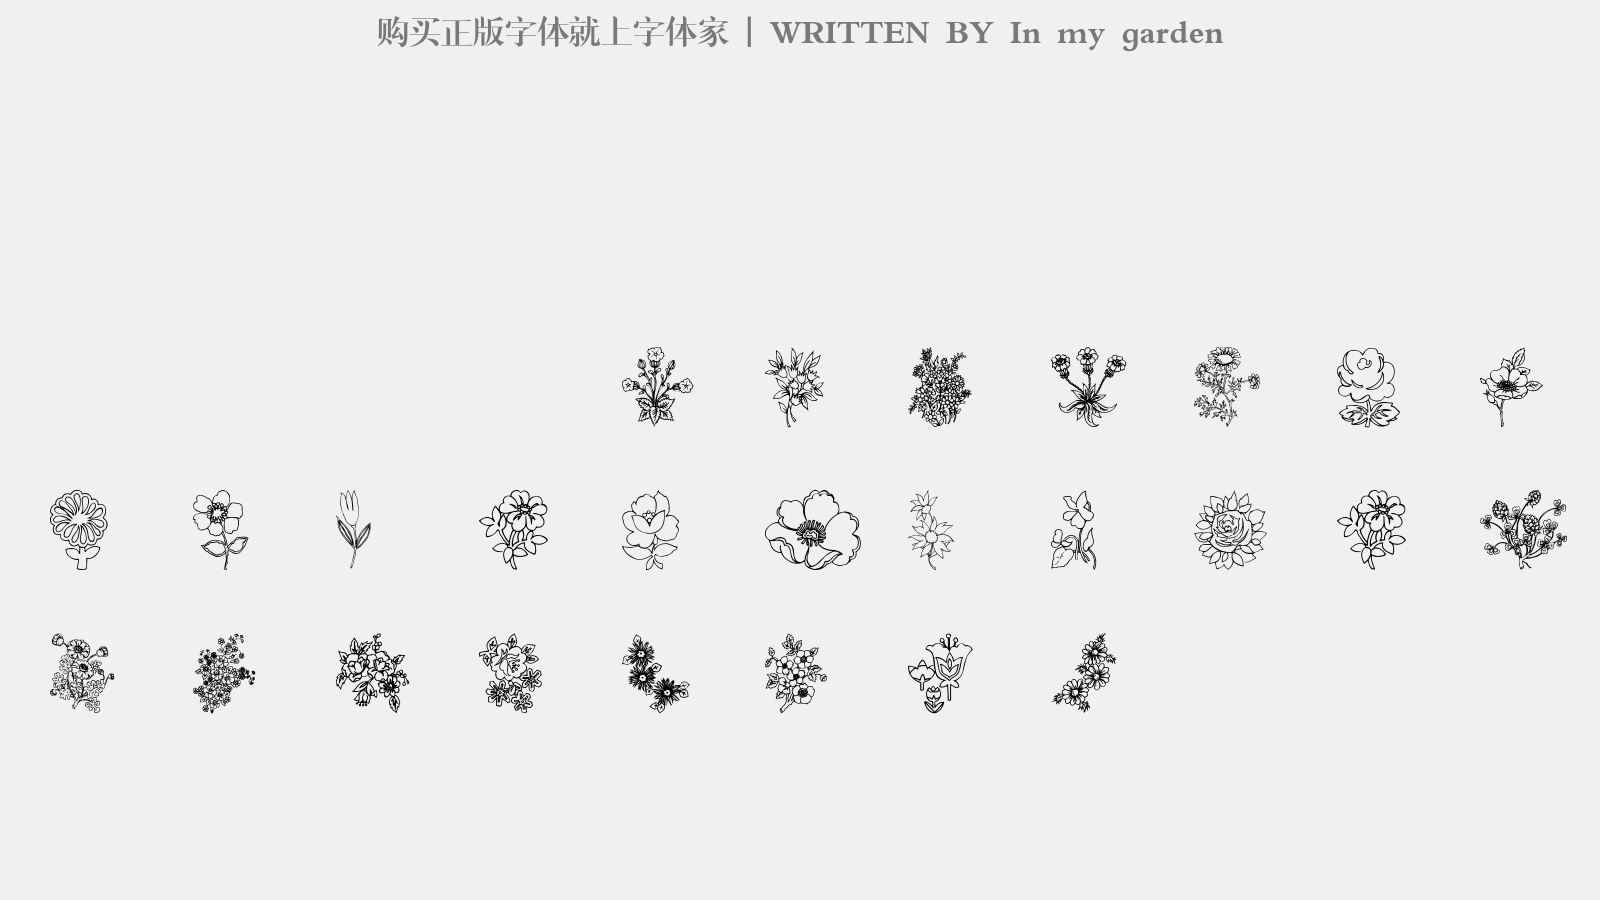 In my garden - 大写字母/小写字母/数字